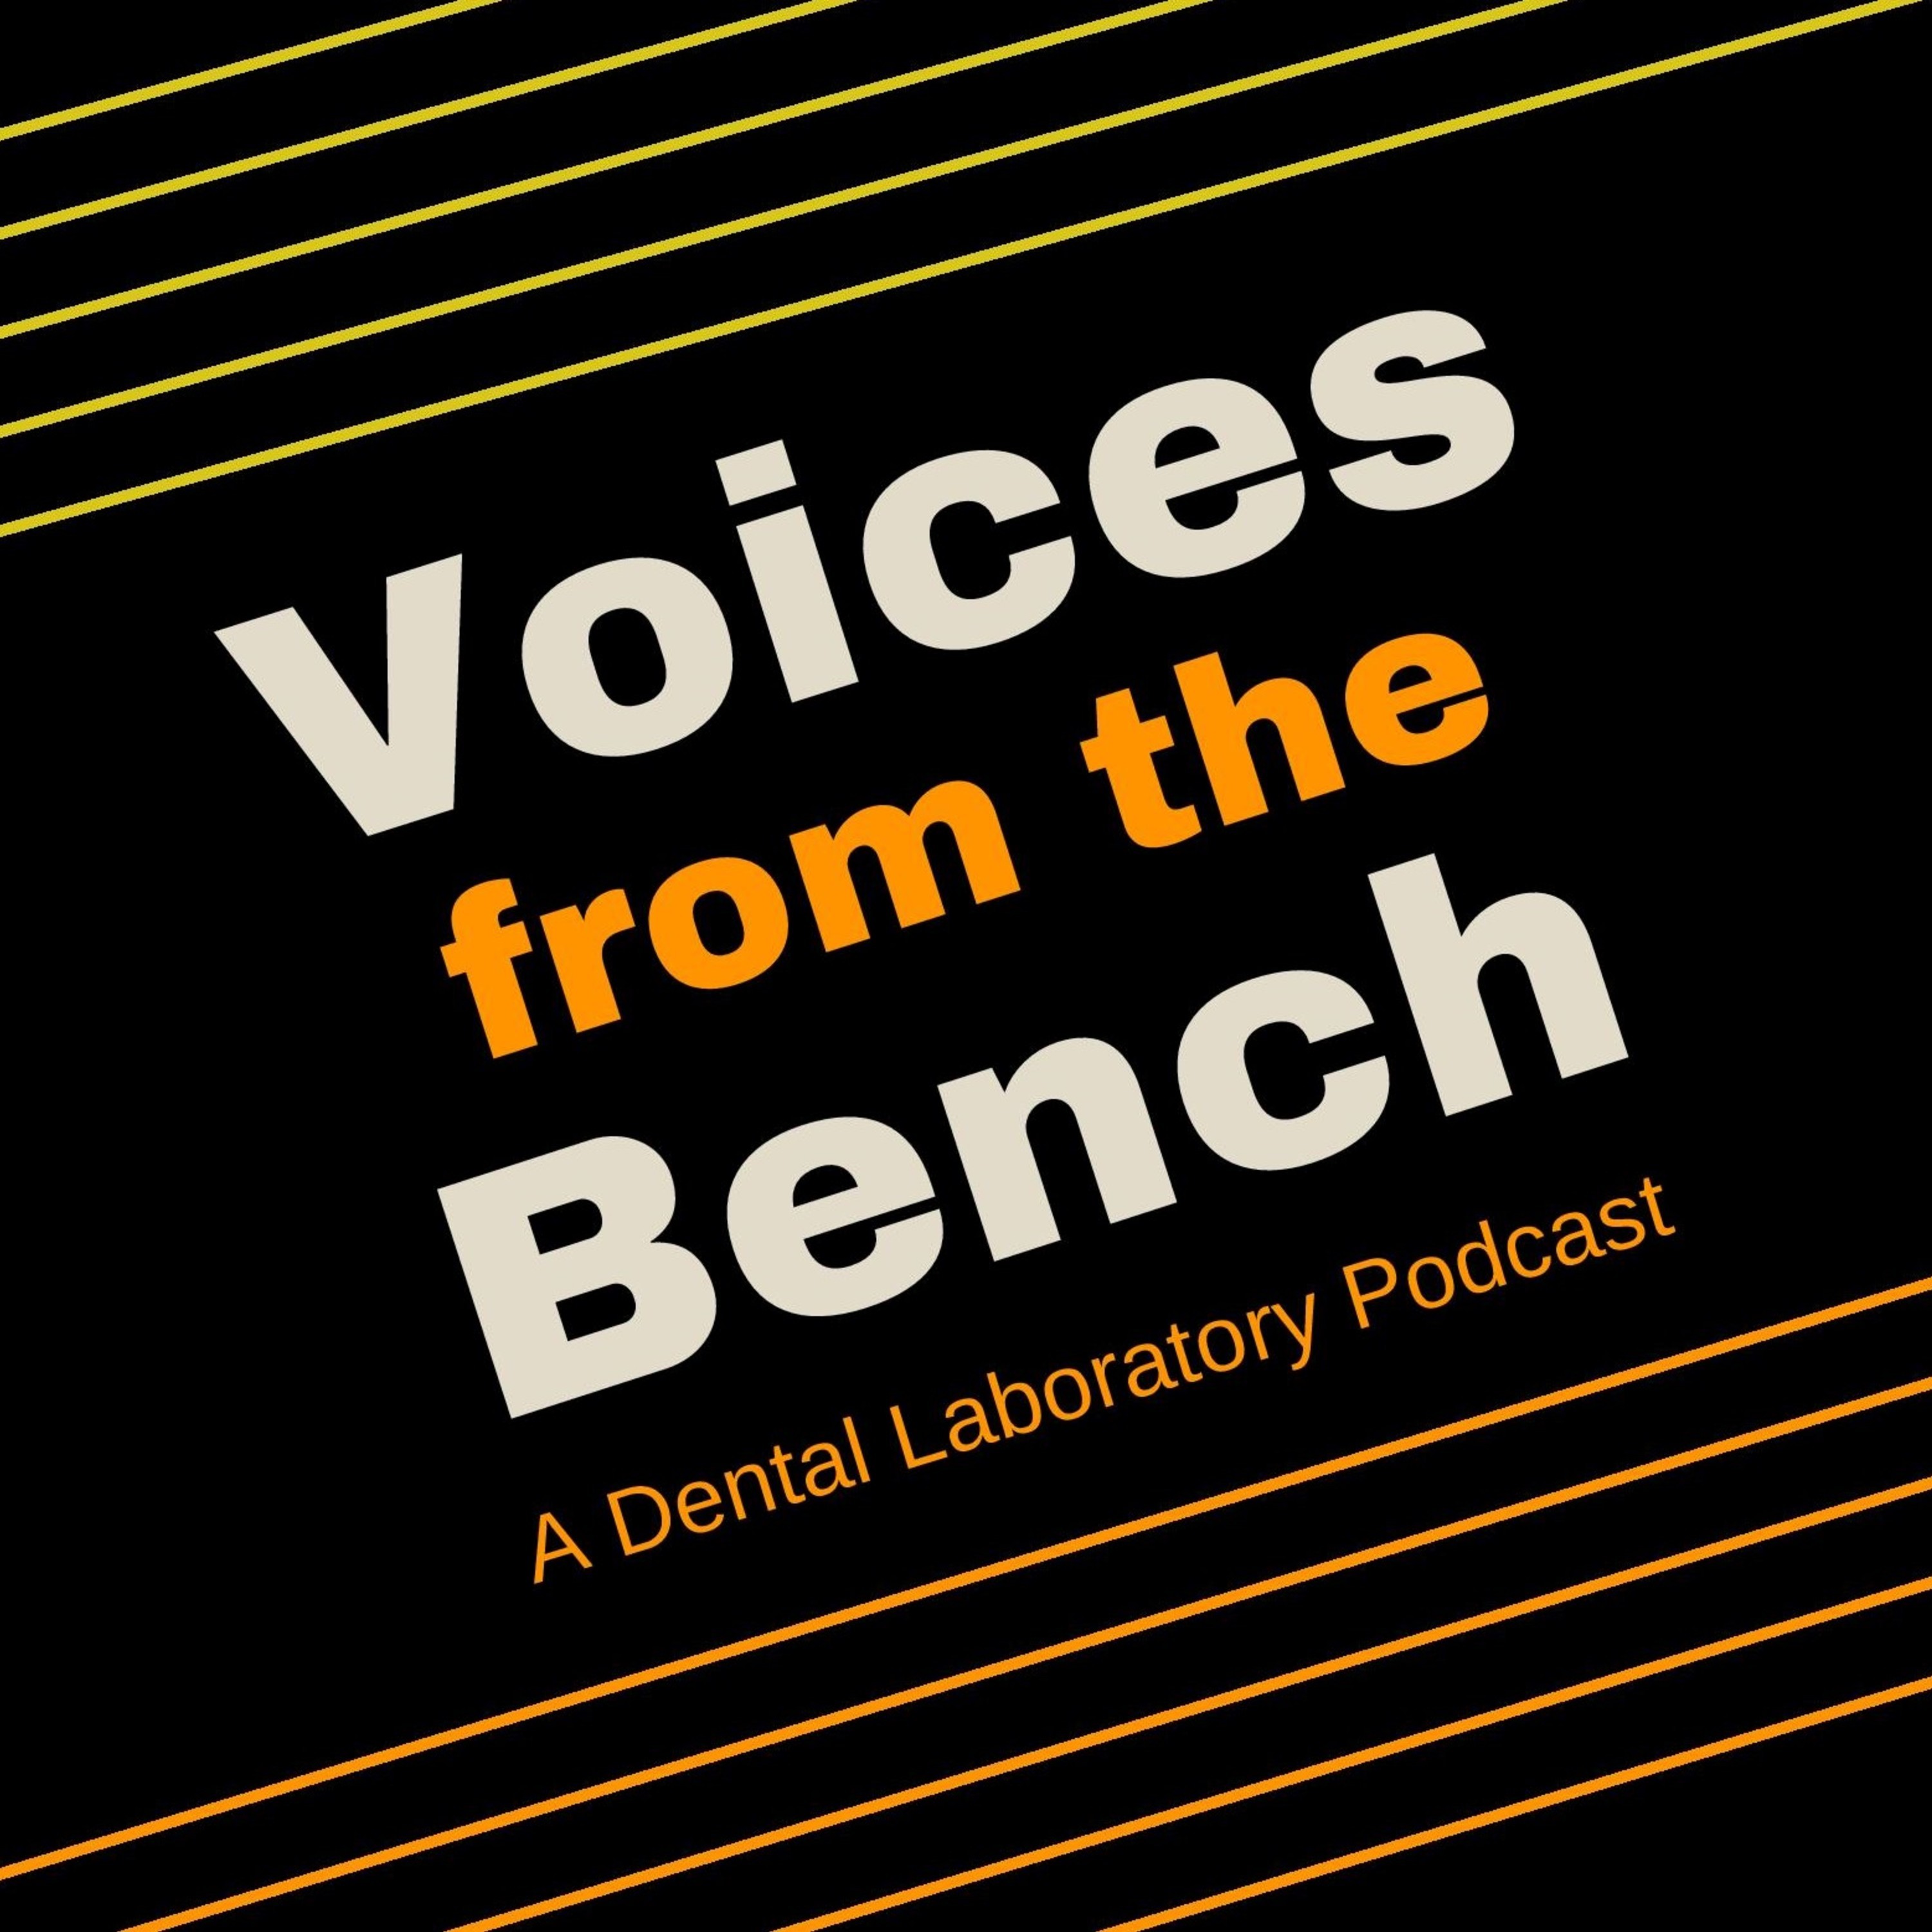 Episode 79: Making A Dent in Illinois with Denturism: Katie Rinaldo Part 2